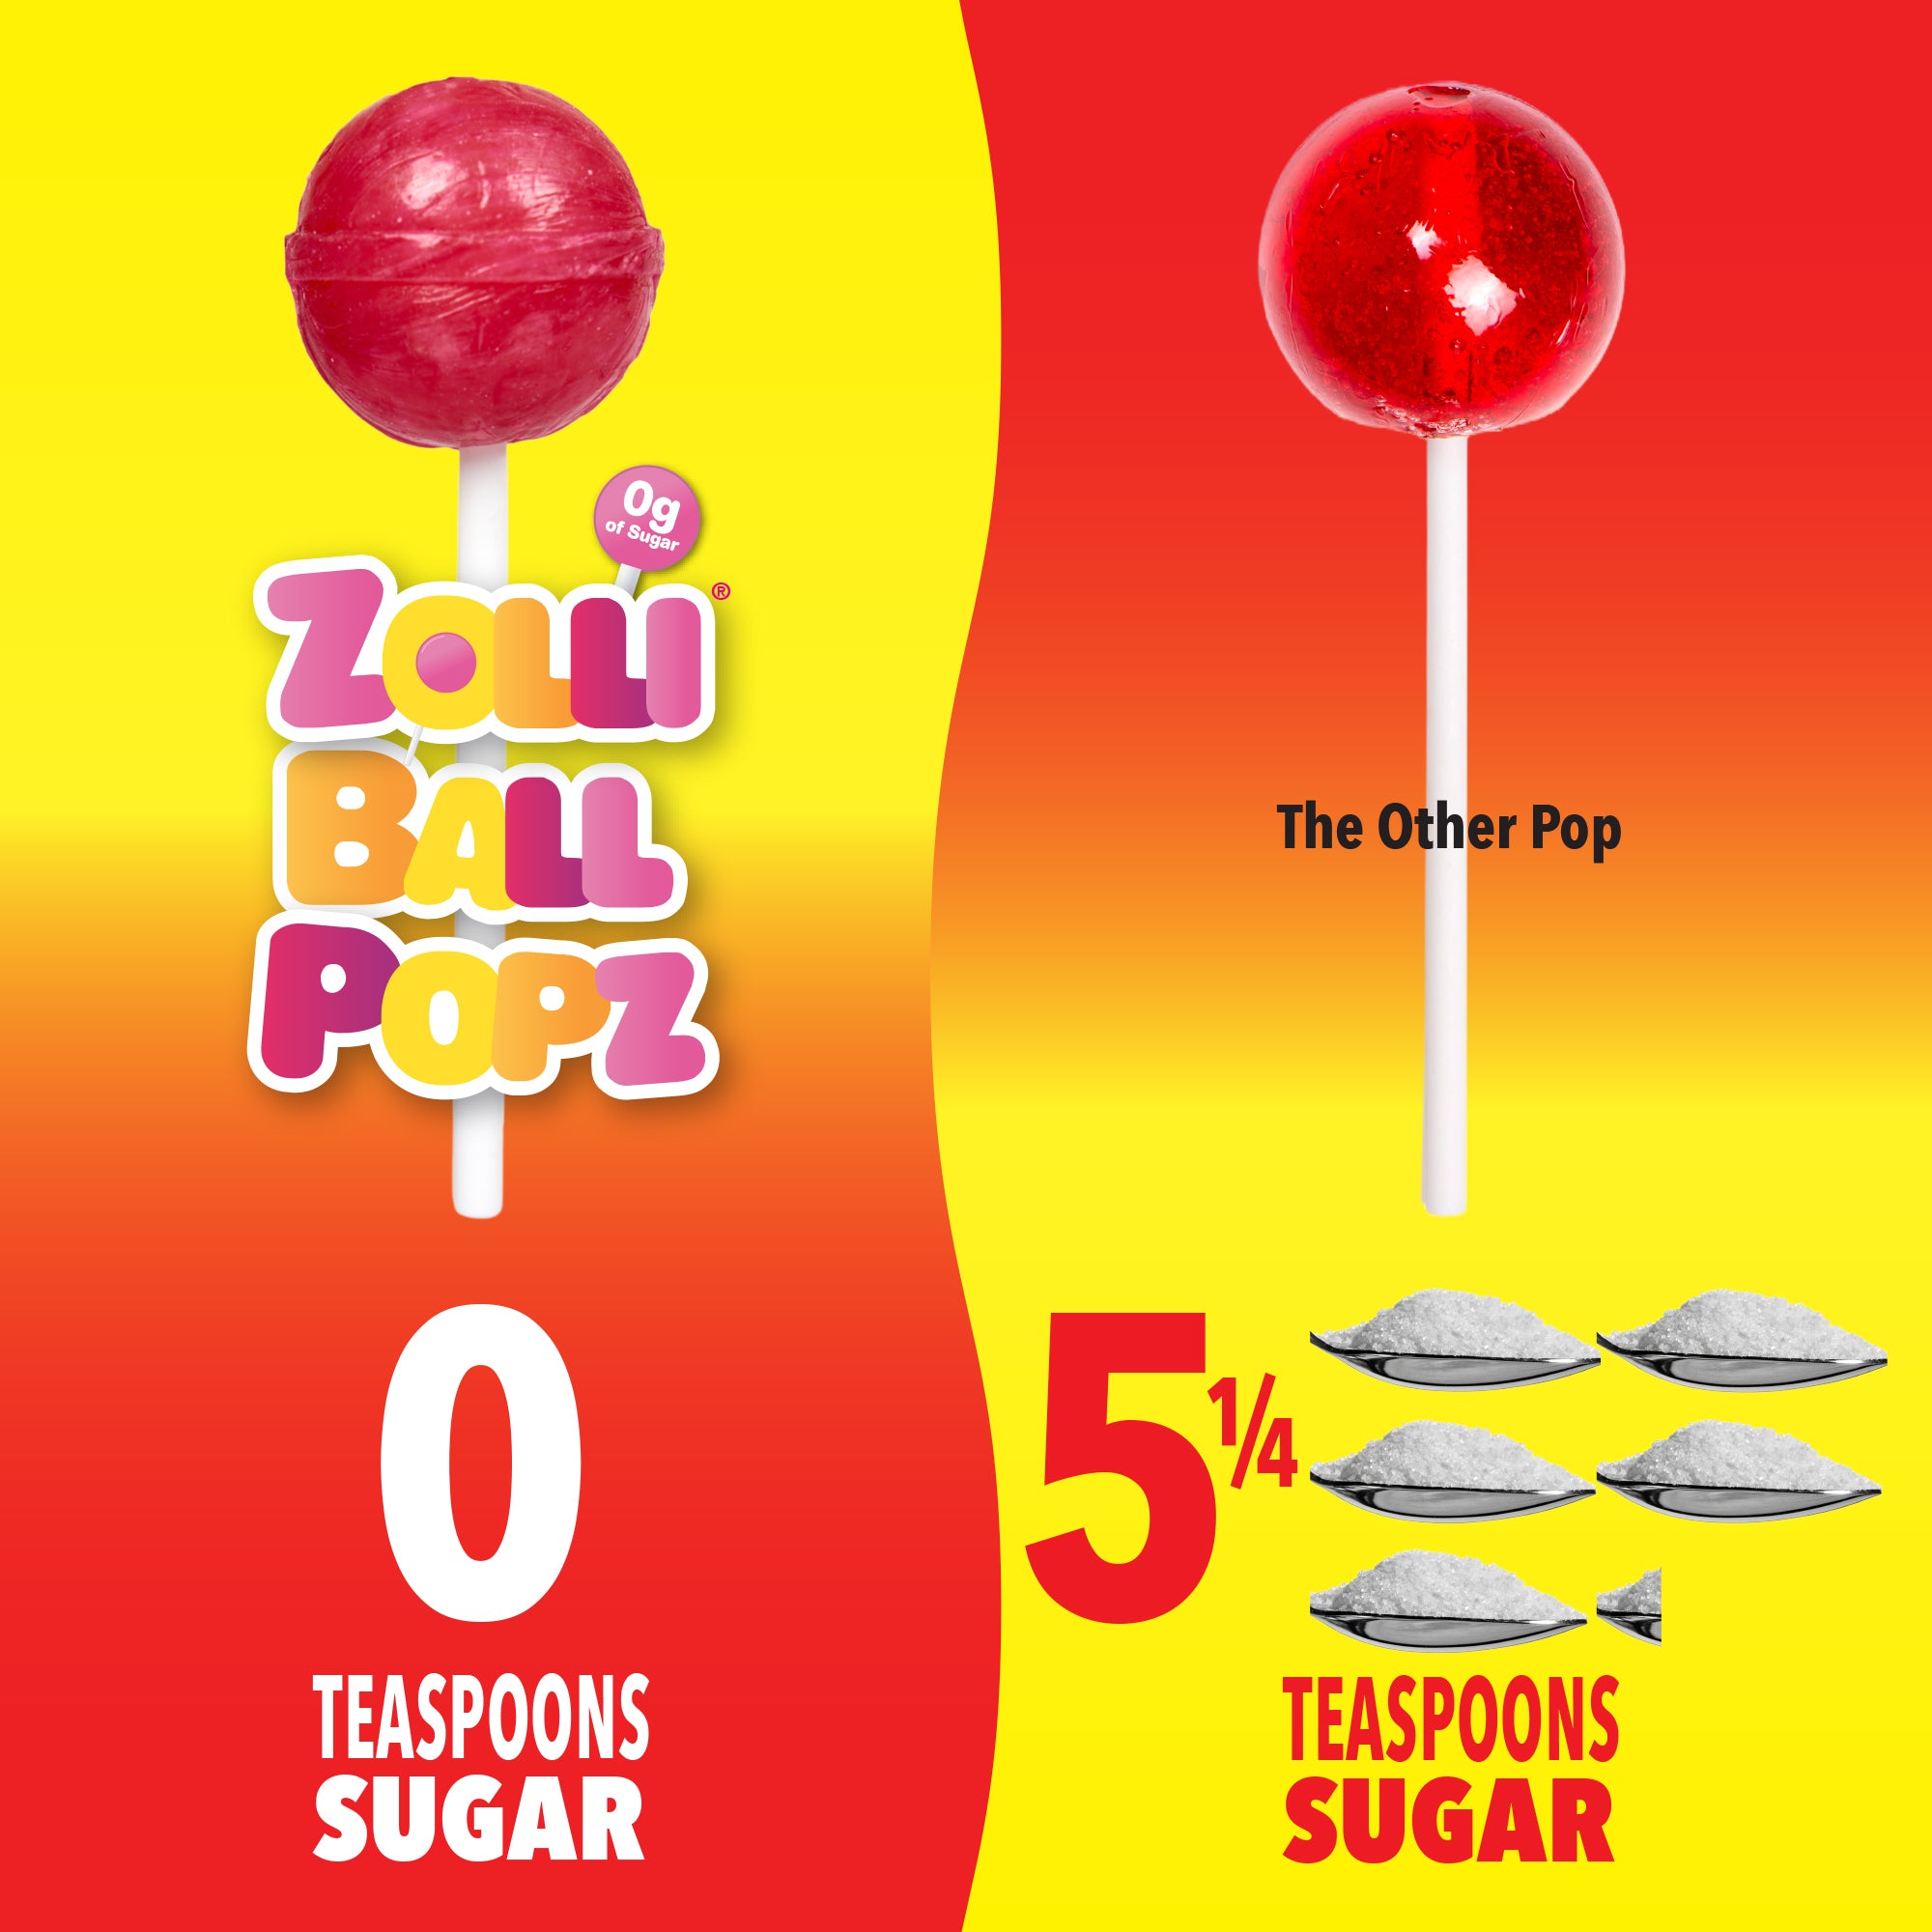 Zolli Ball Popz have 0 teaspoons of sugar. Competing ball pop lollipops have 5.25 teaspoons of sugar.